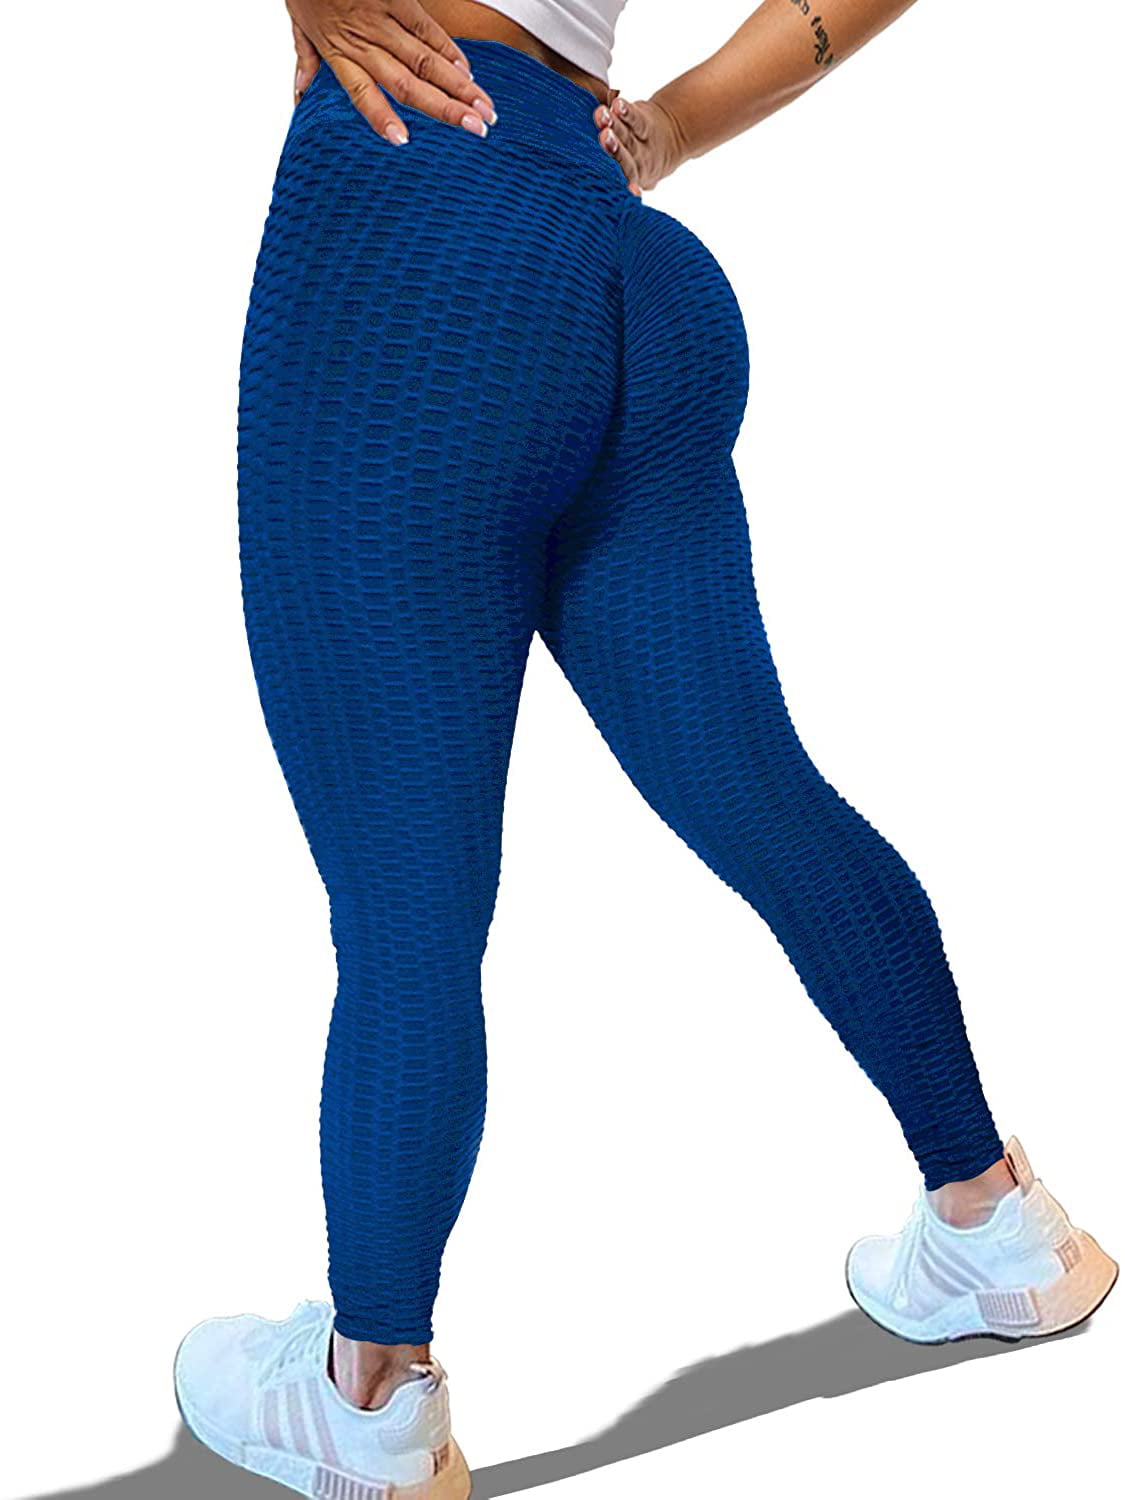 LWZWM Workout Legging 3D Printed Butt Lifting Yoga Pants for Women Teens  Girls Sports Drawstring High Waist Stretch Stretchy Fitness Leggings Yoga